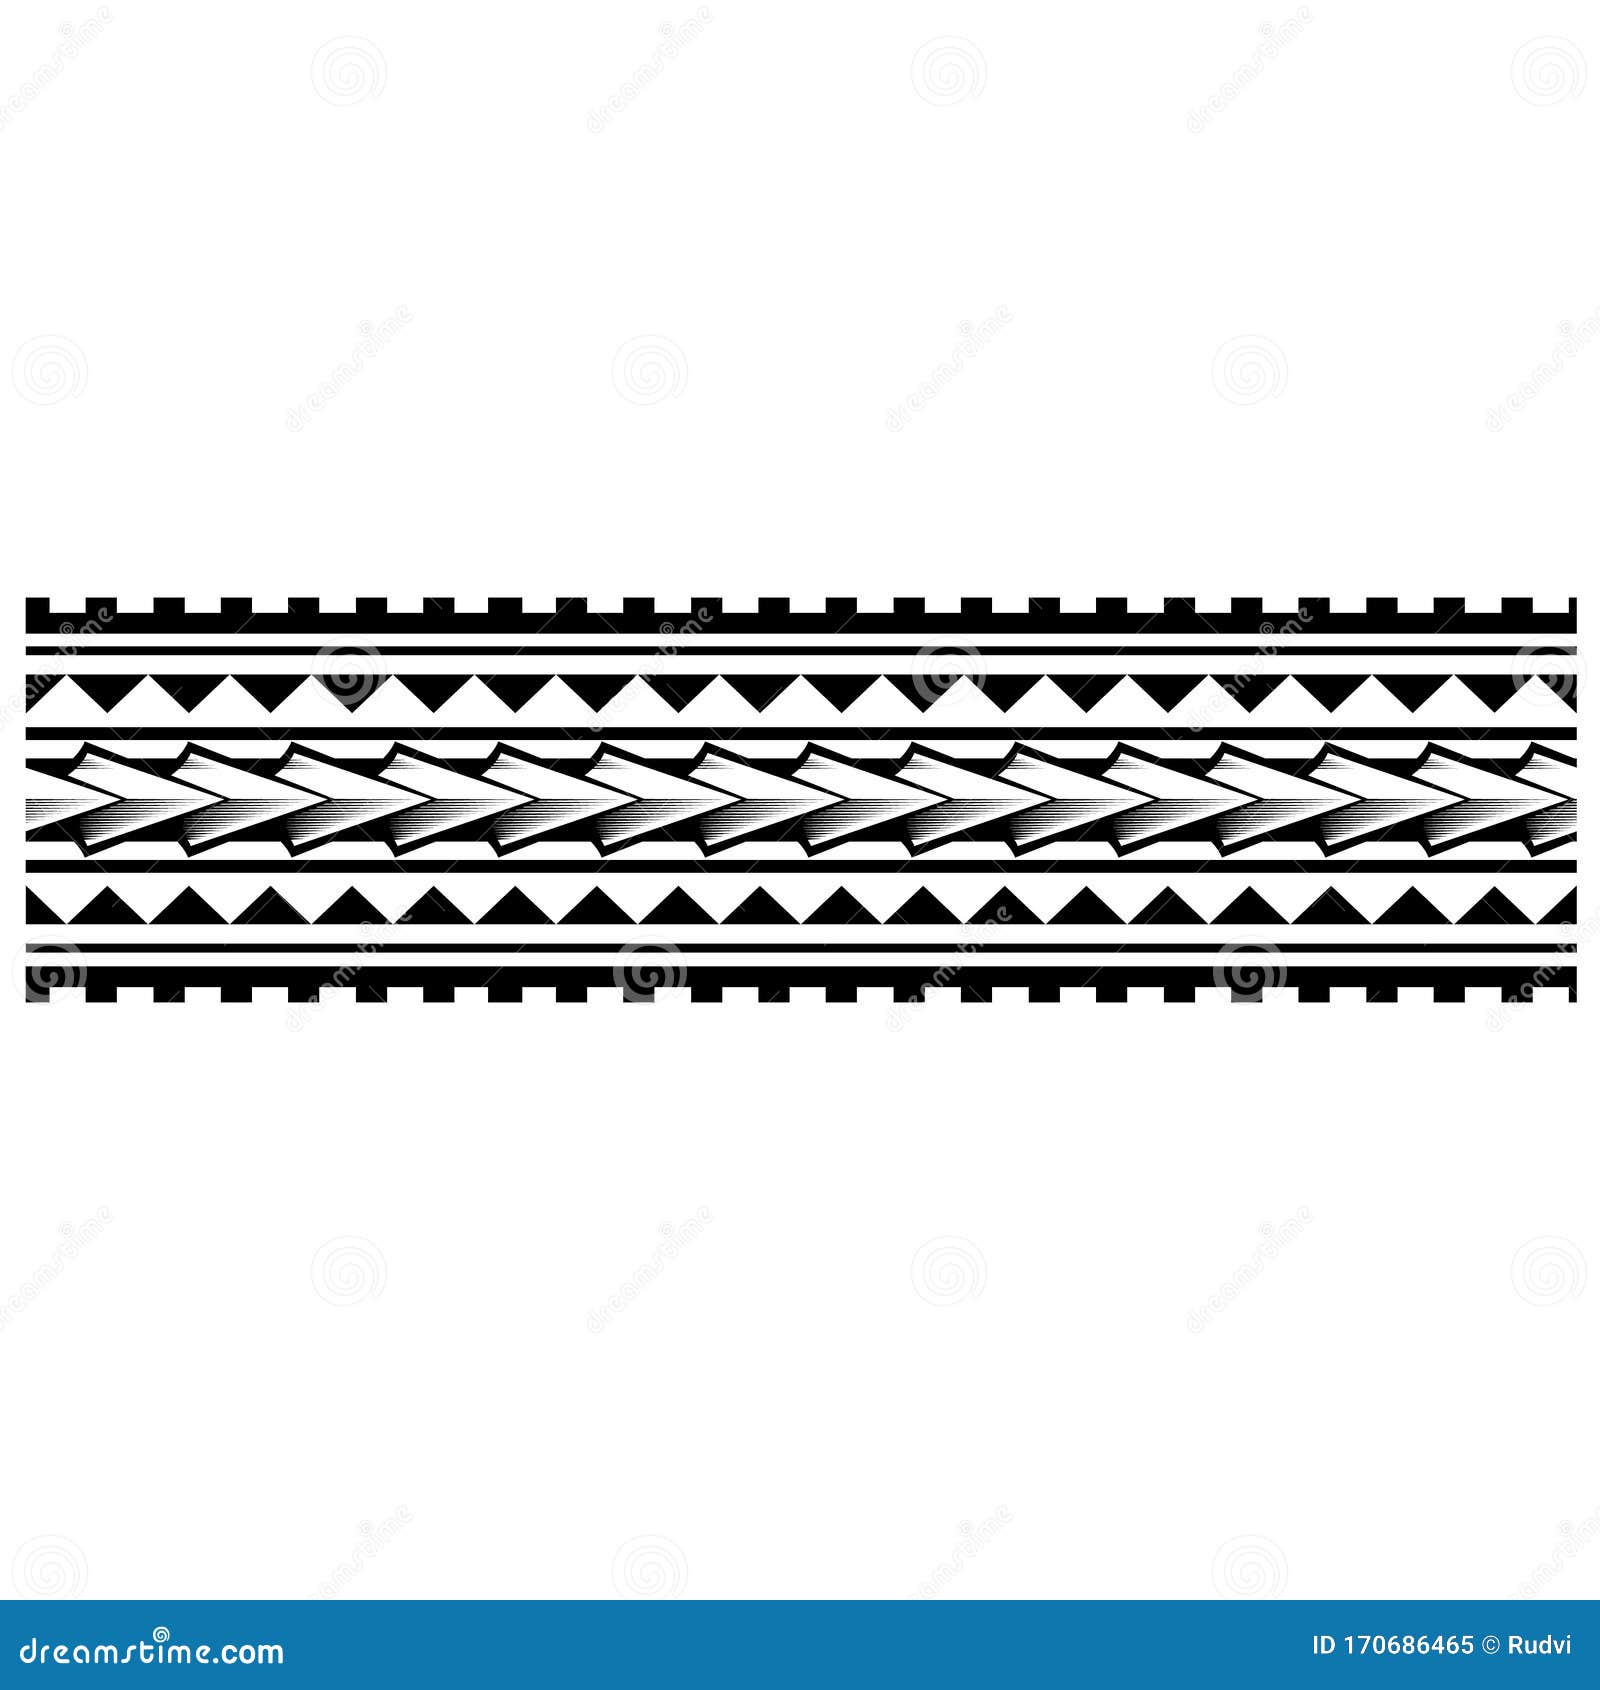 Polynesian Tribal Tattoo Designs, Polynesian Armband. Make a Stencil  Forearm Tattoo. Design Border. Stock Vector - Illustration of stencil,  maori: 170686465